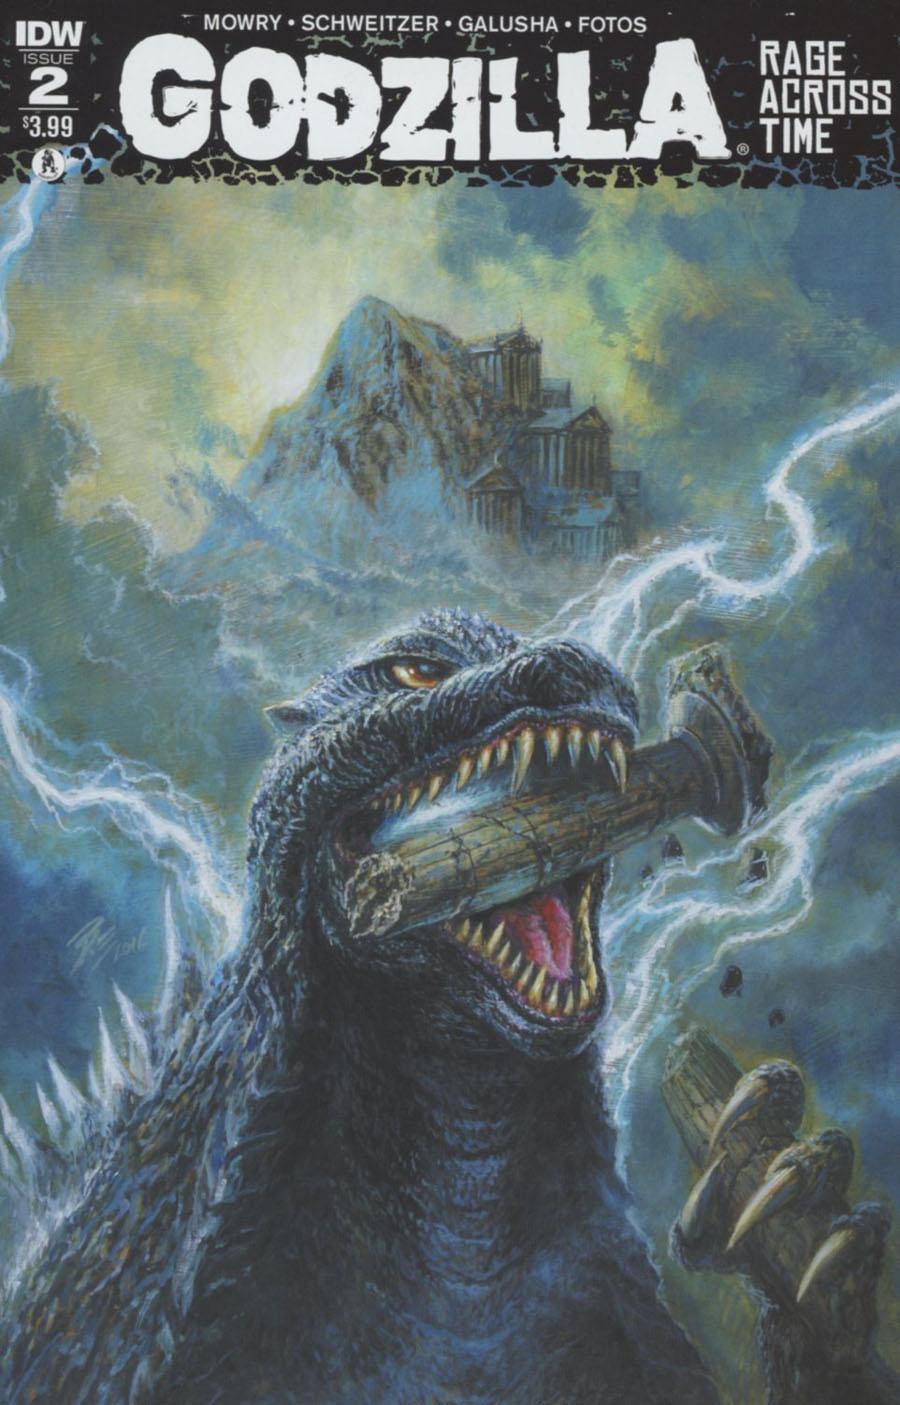 Godzilla Rage Across Time Vol. 1 #2